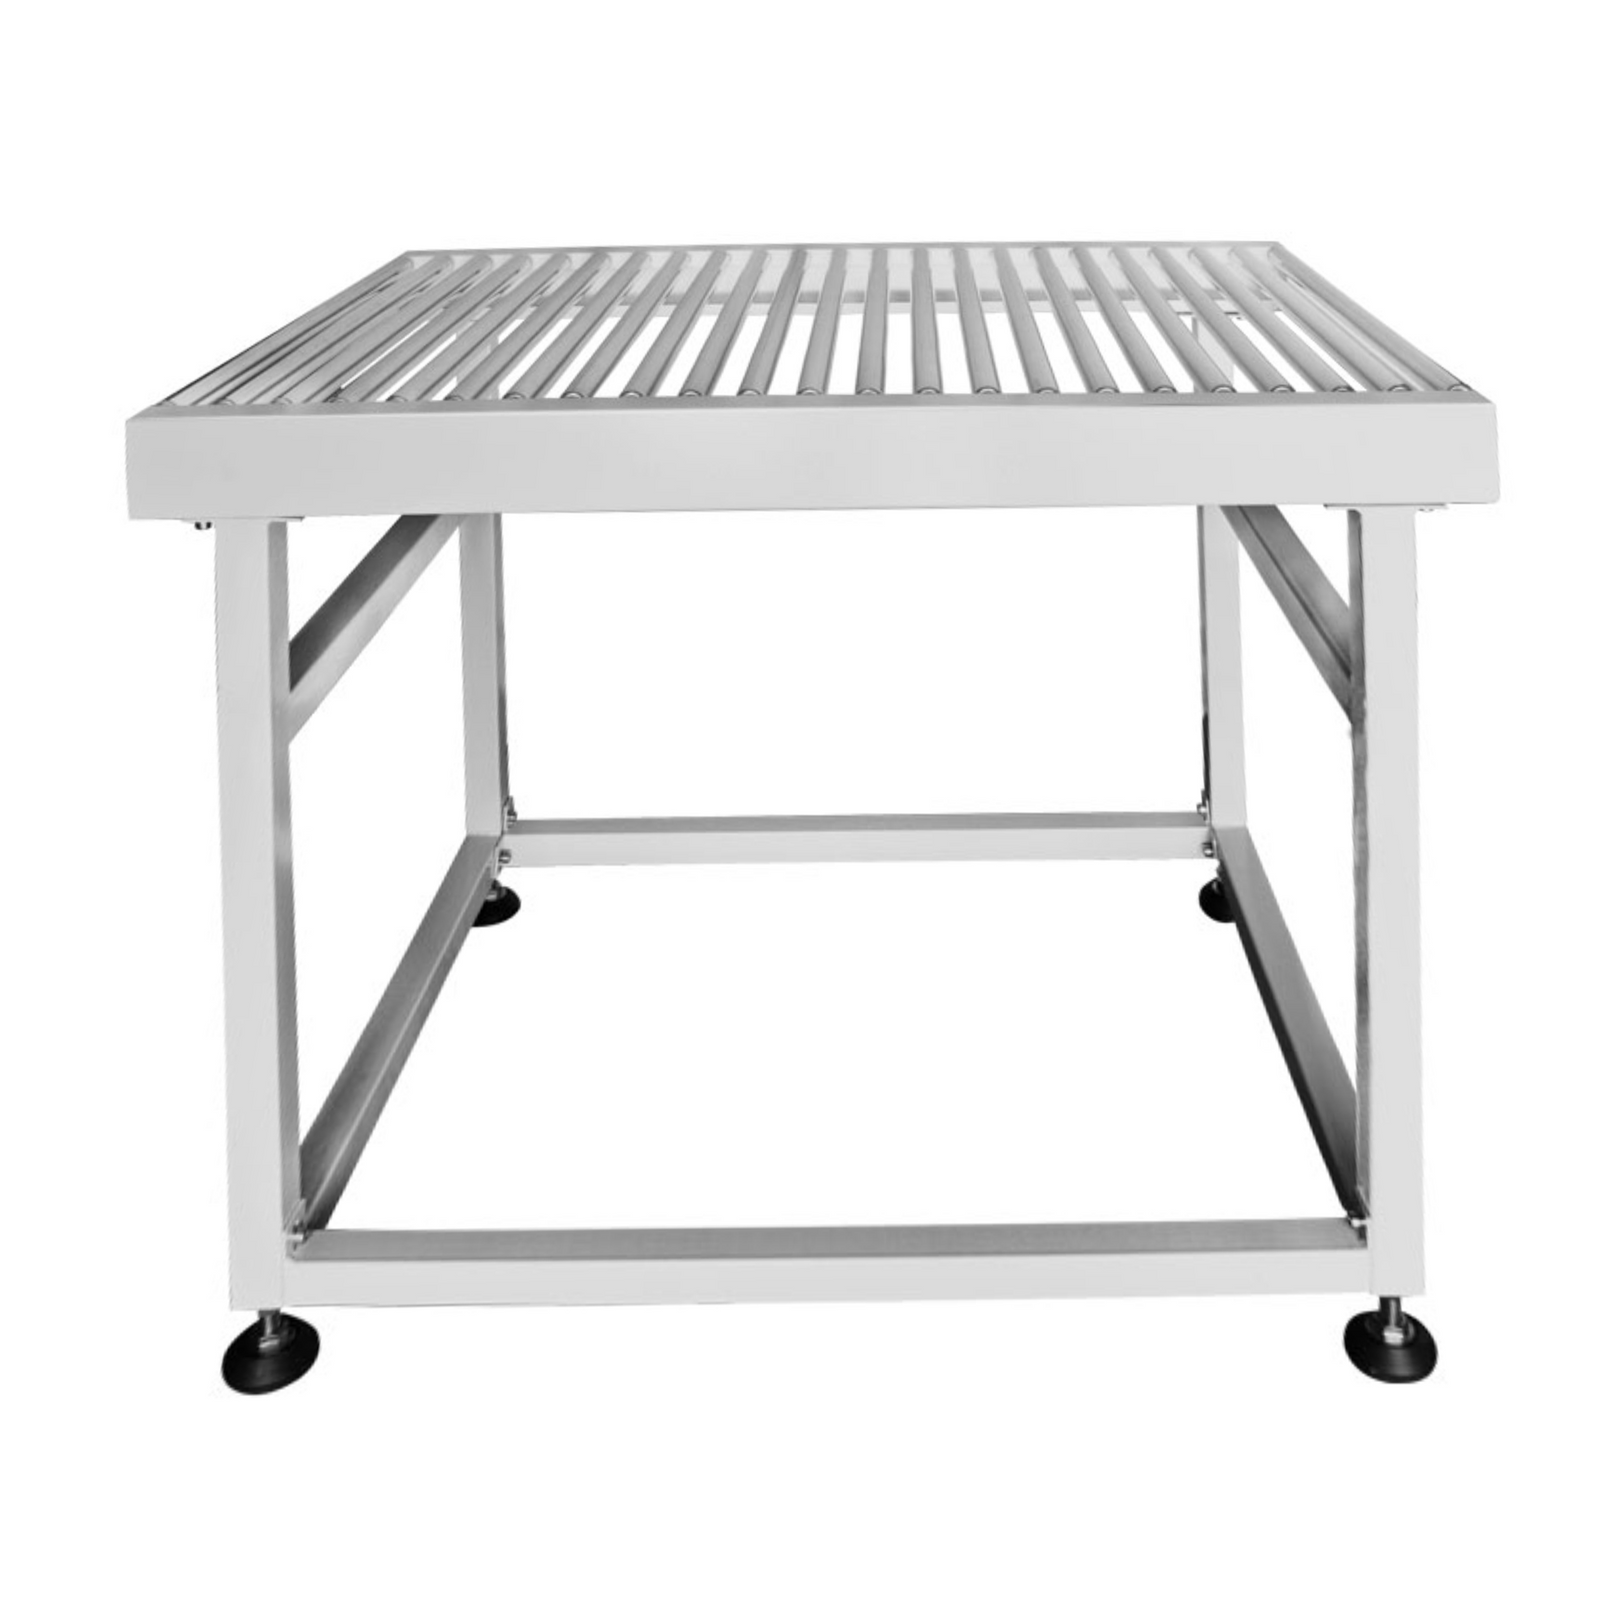 silver conveyor gravity roller table with black leg